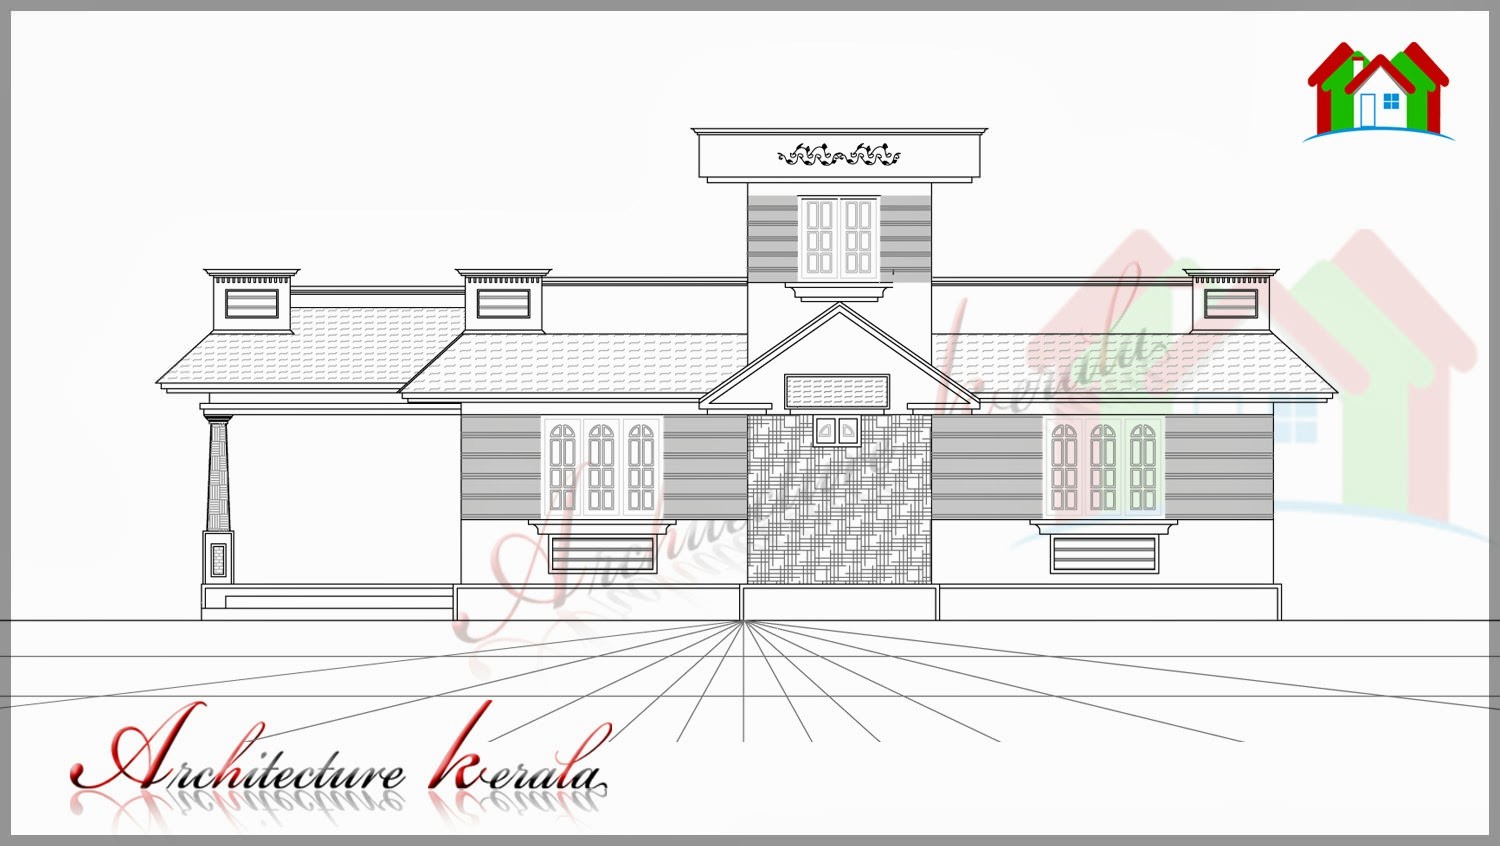 1197 Sq Ft 3 Bedroom Villa In Cents Plot Kerala Home Design And